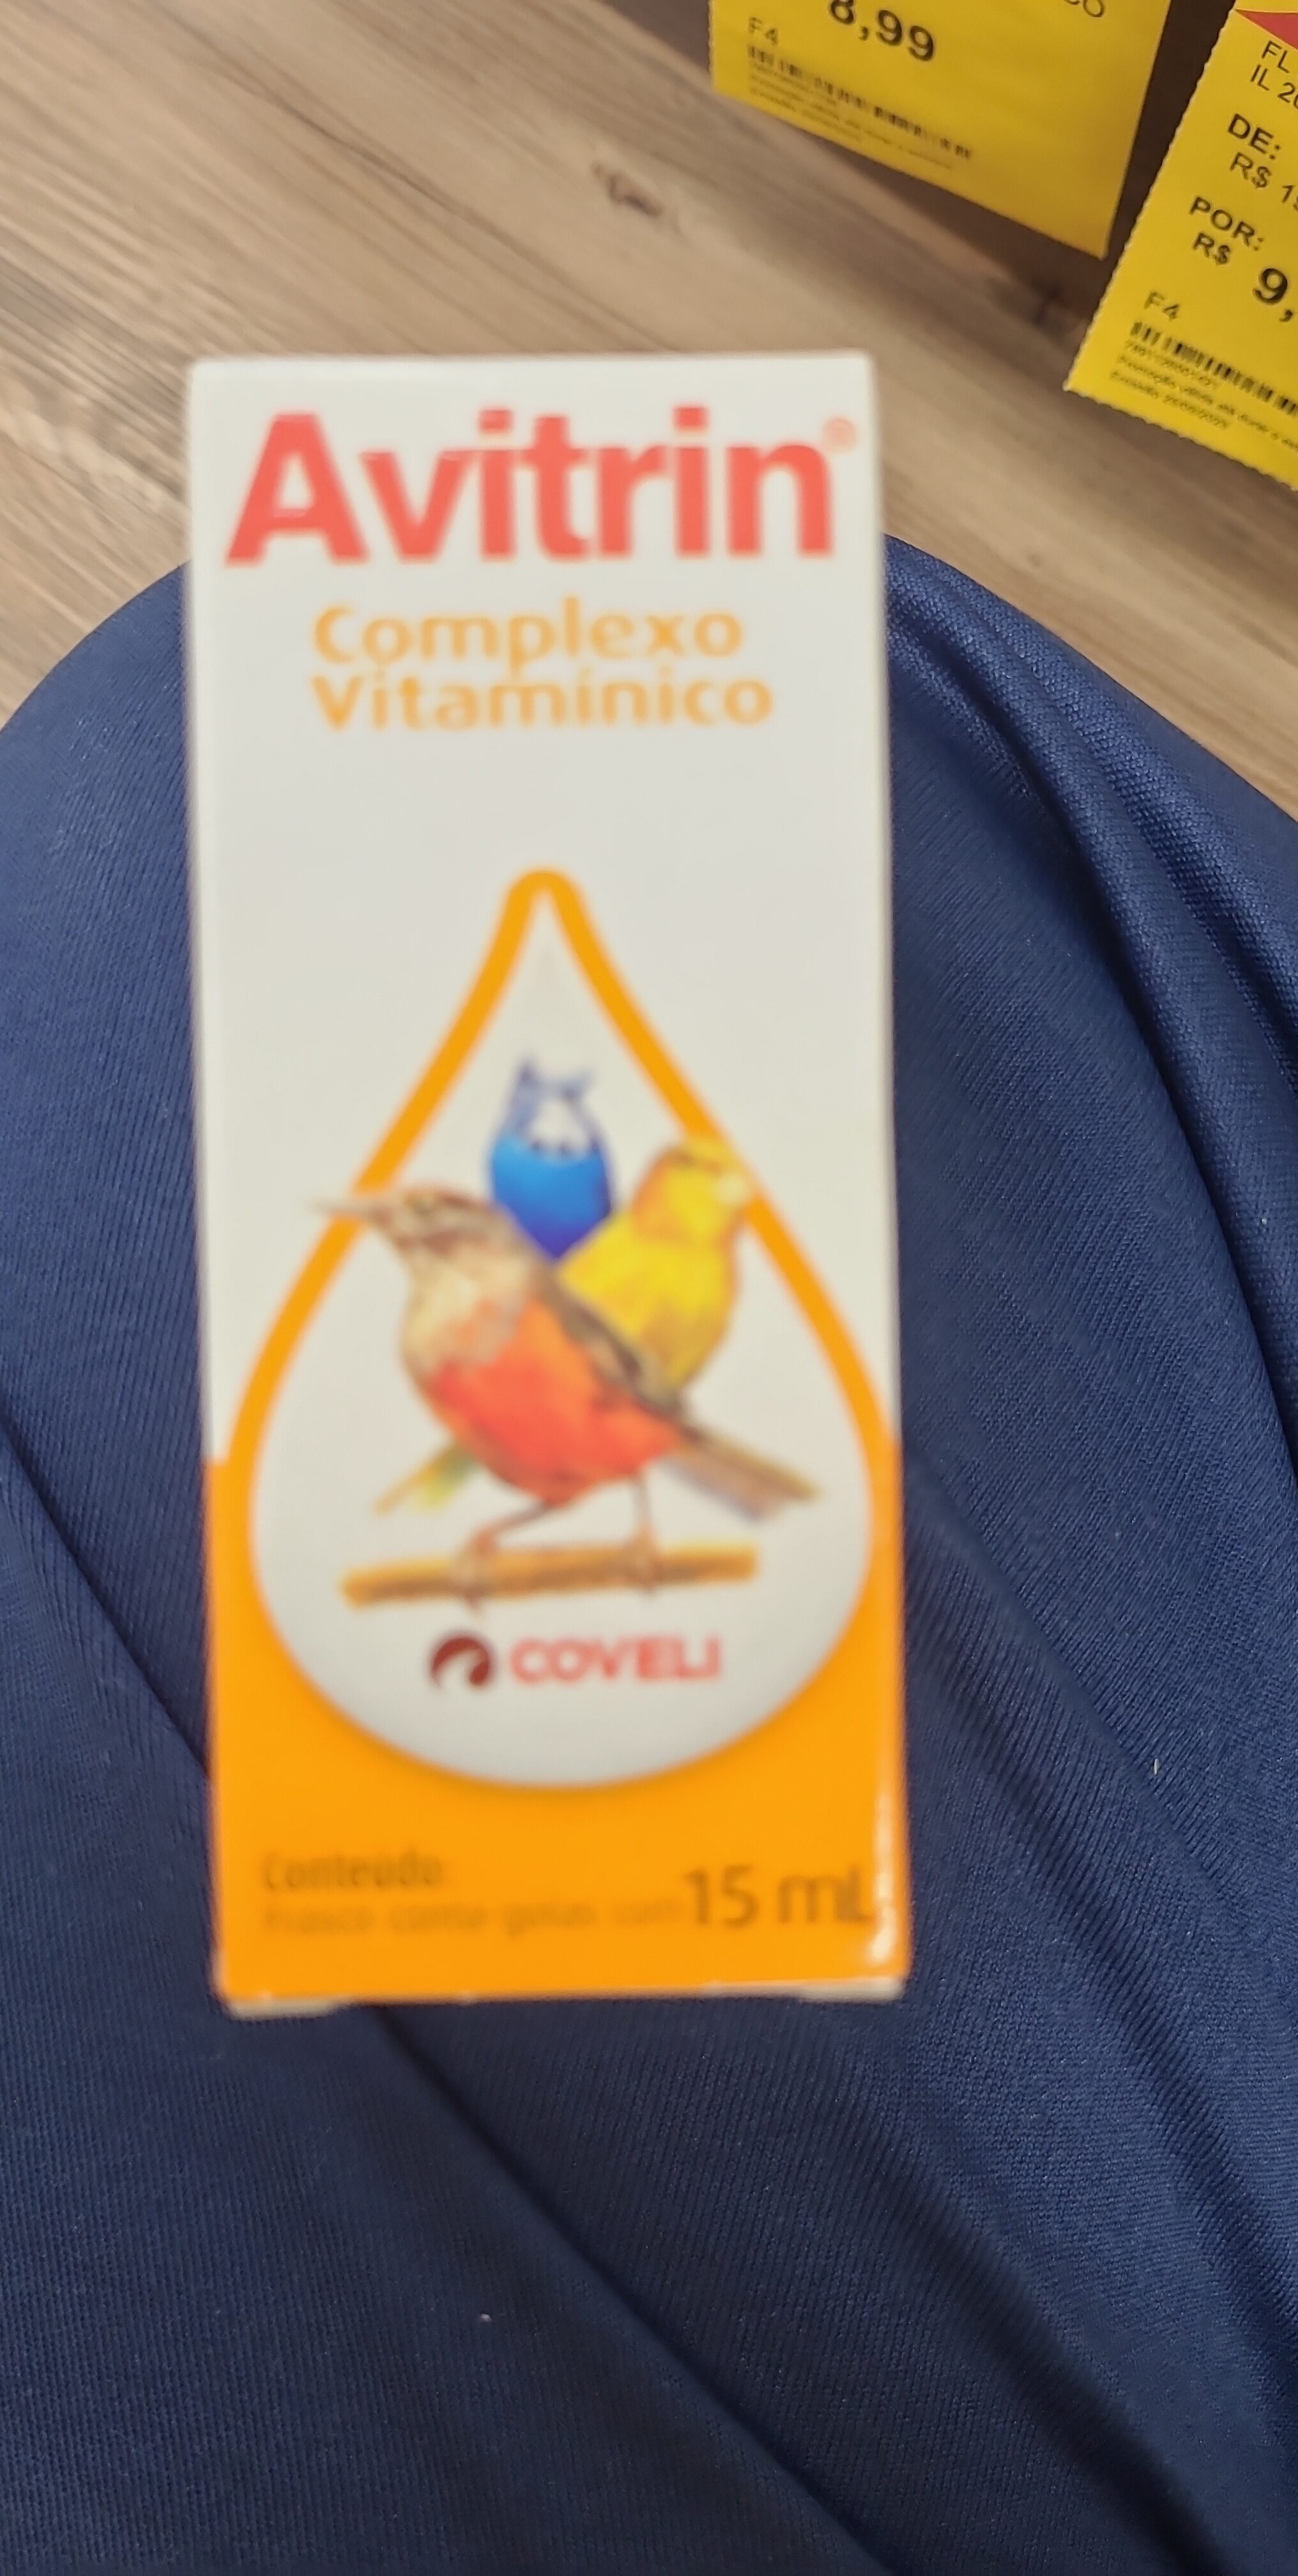 Avitrin complexo vitaminico - Product - pt